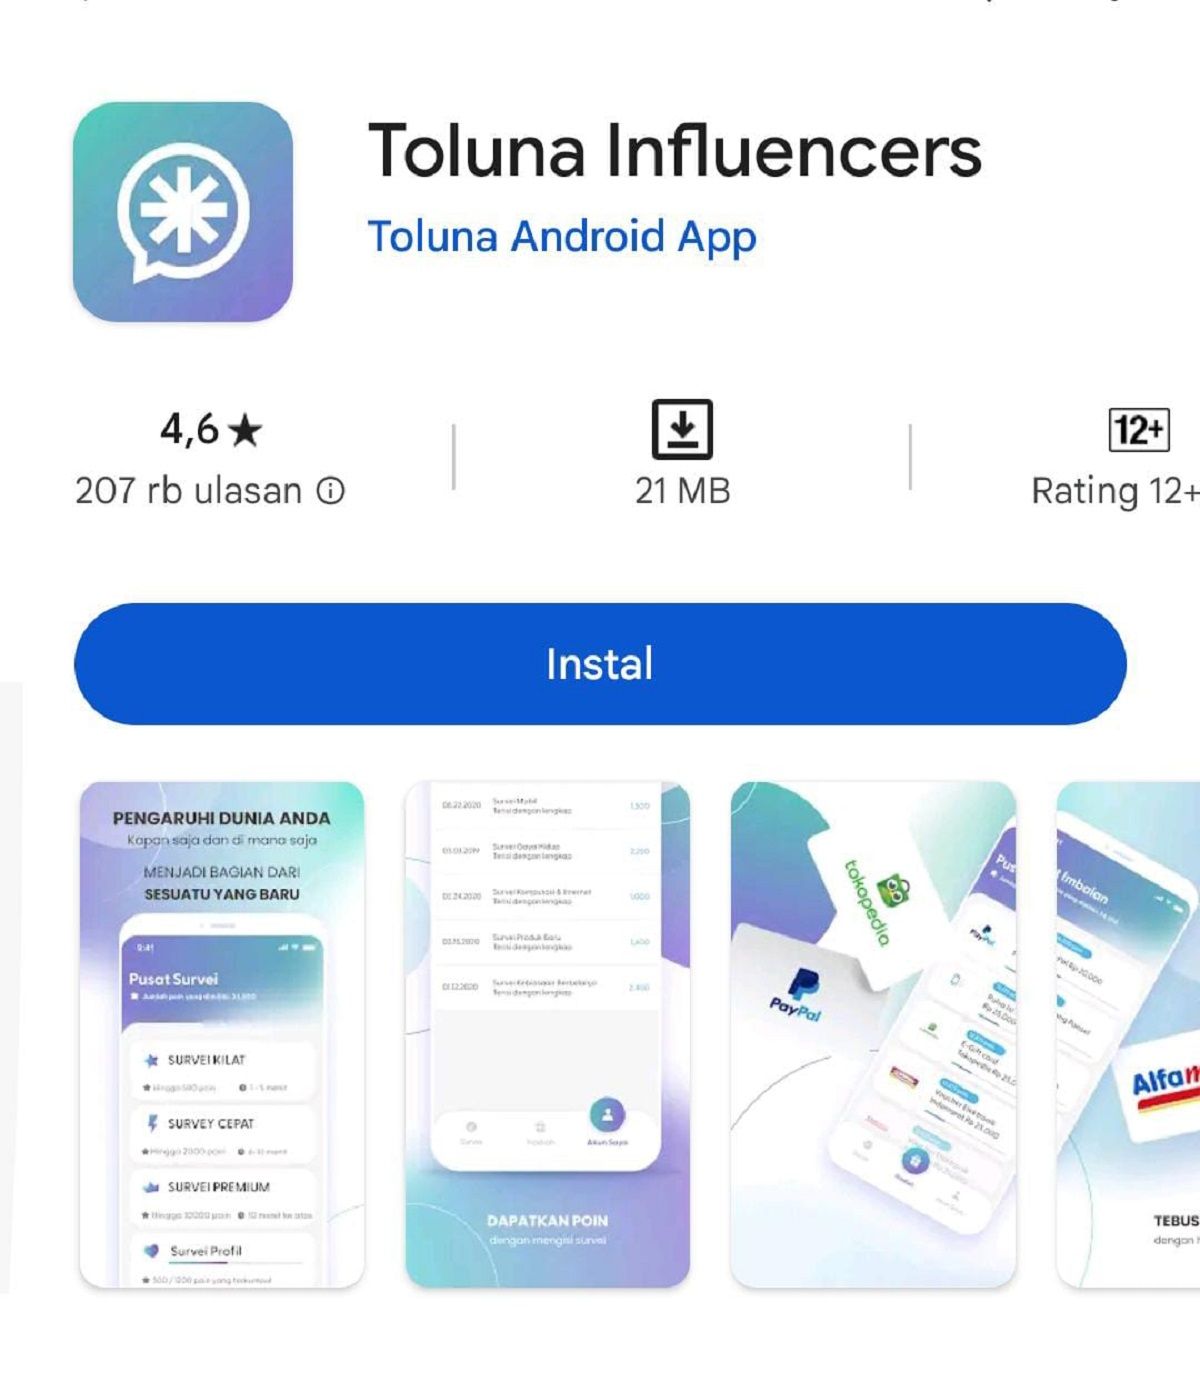 Toluna Influencers / Google Play Store